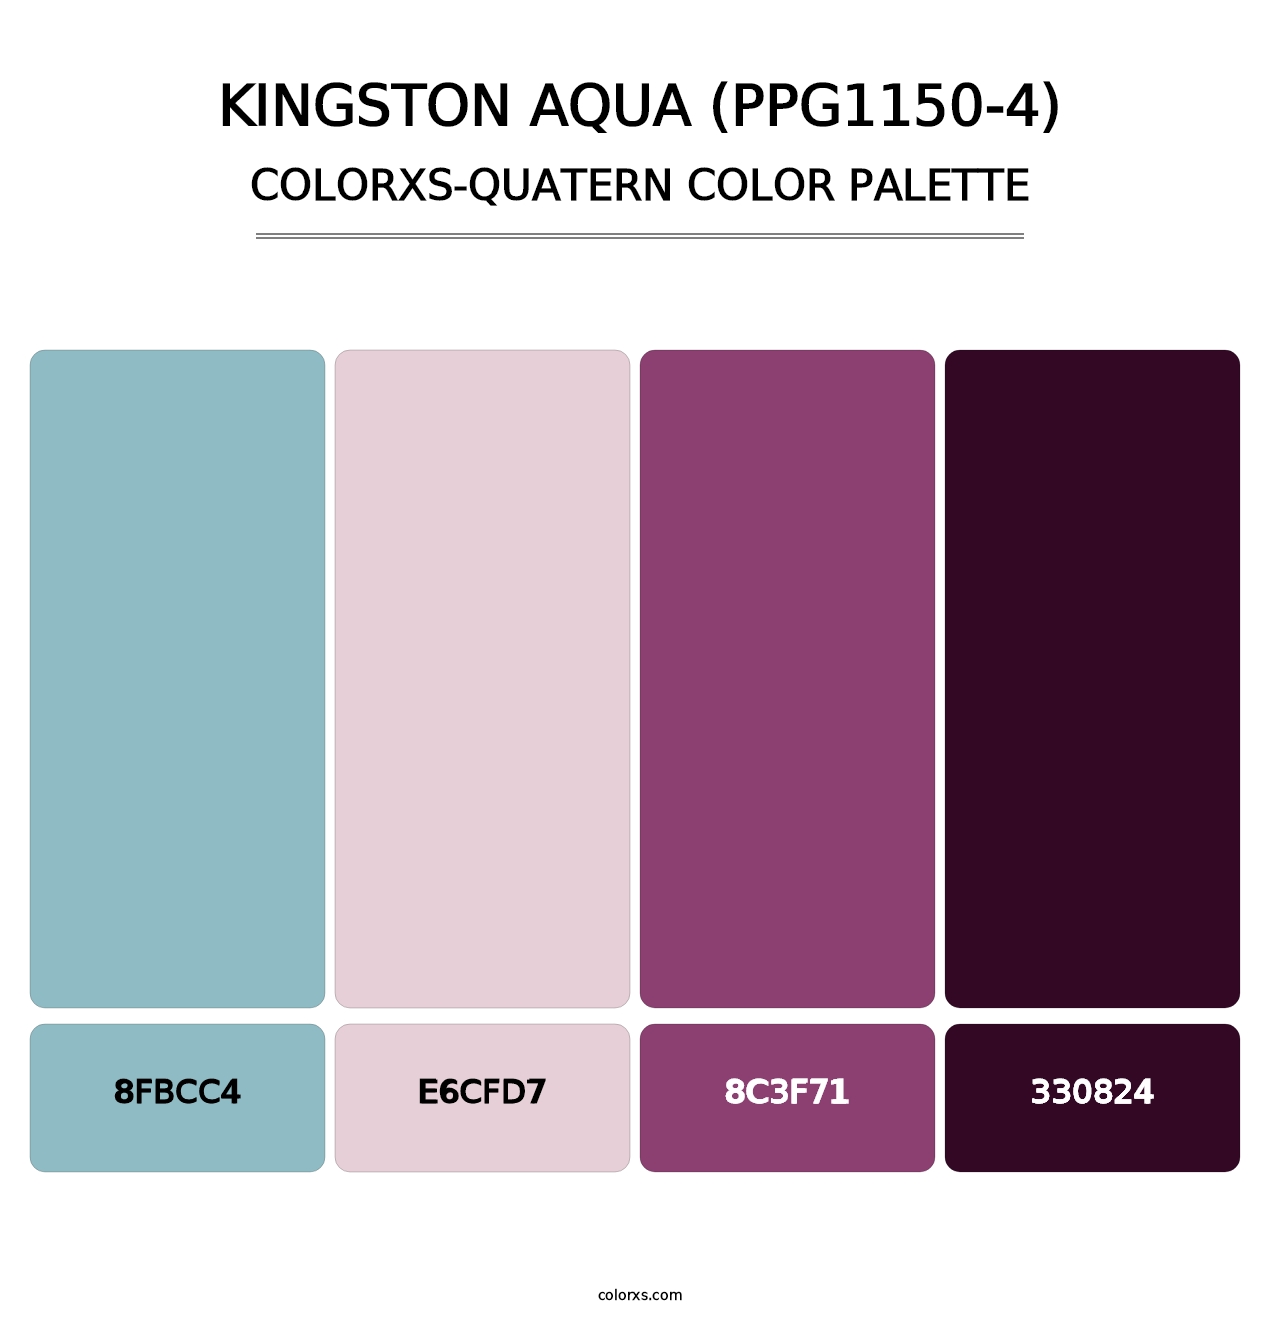 Kingston Aqua (PPG1150-4) - Colorxs Quatern Palette